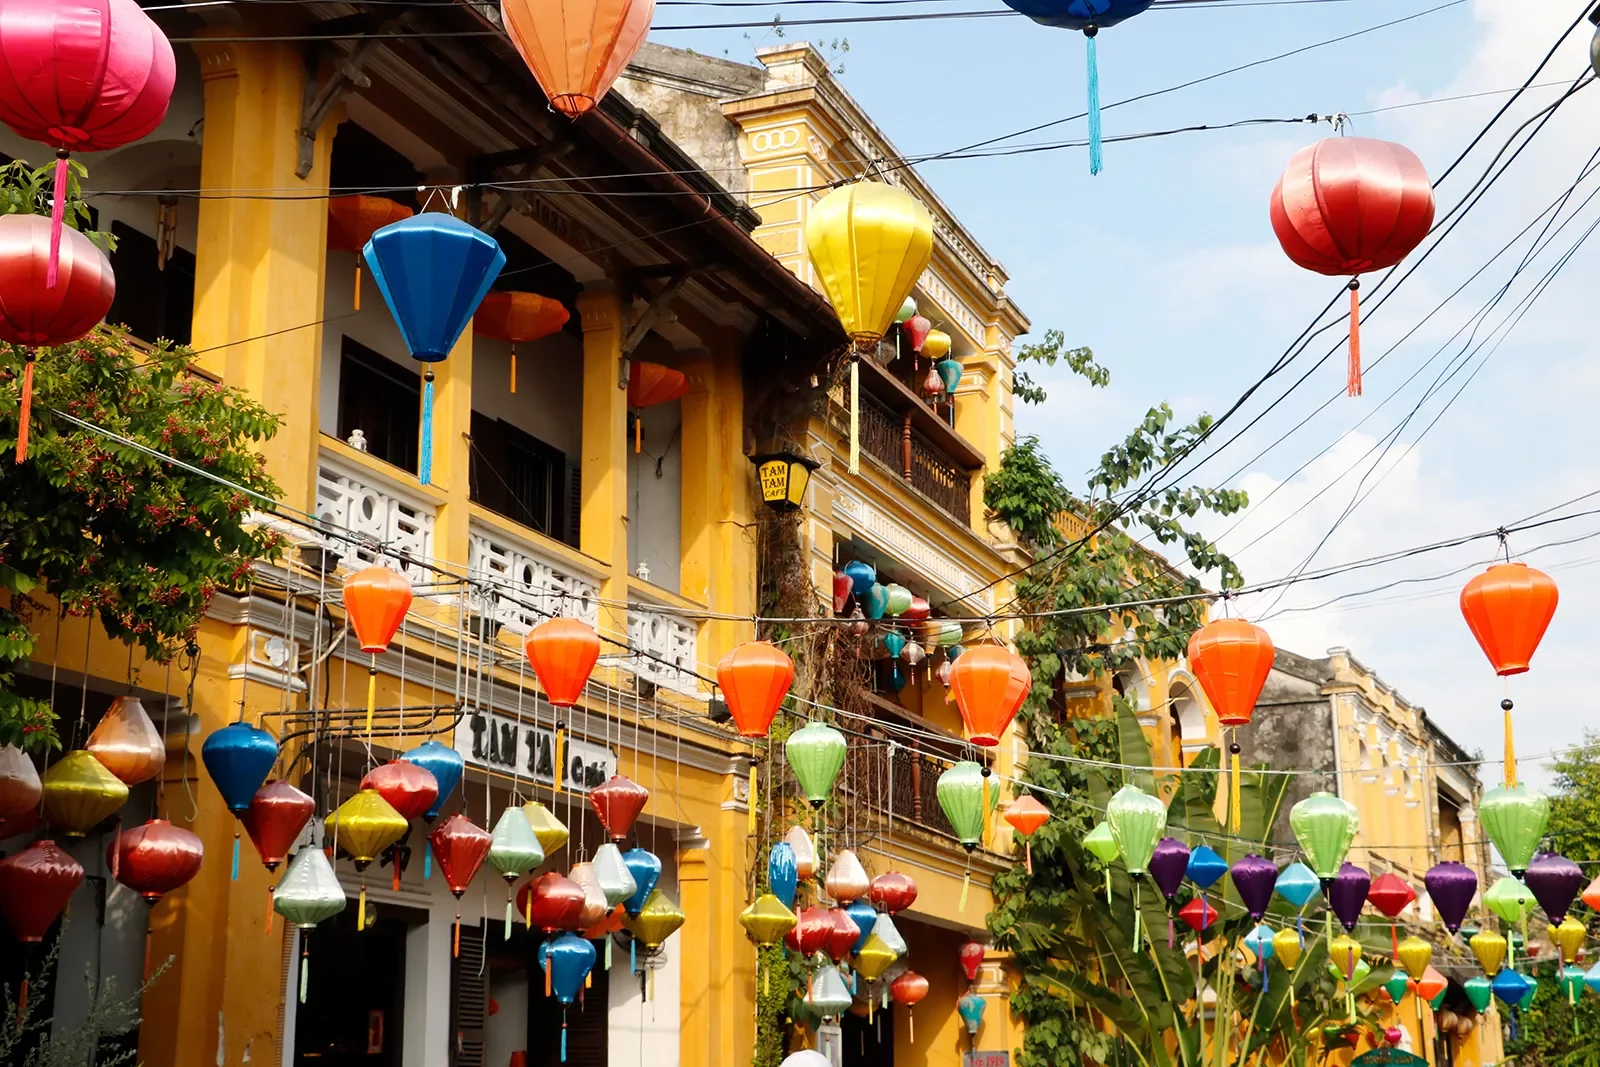 Lanterns hung above a street in Hanoi, Vietnam